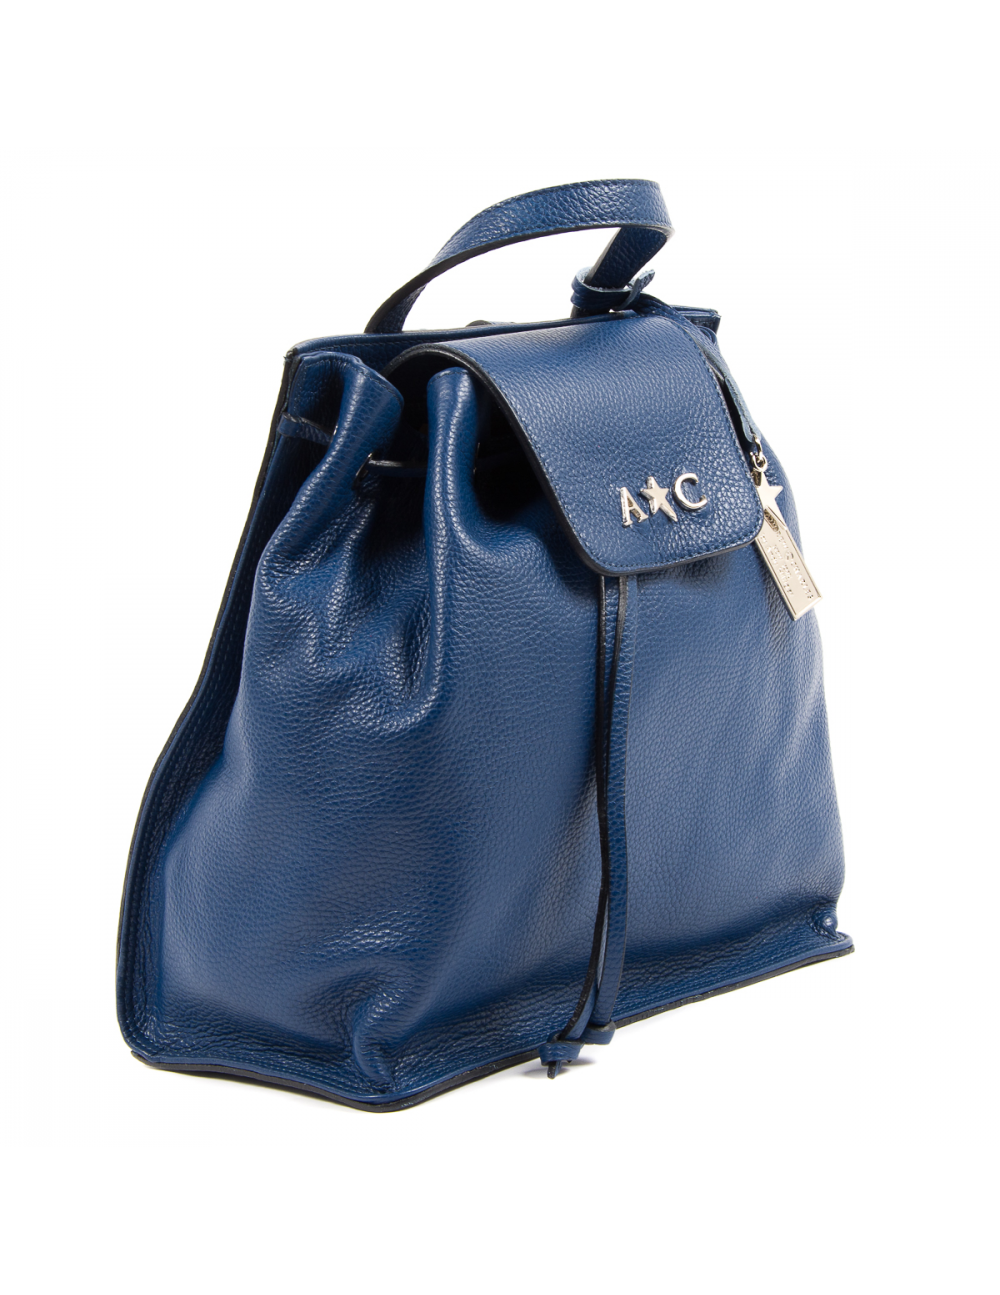 Andrew Charles Womens Handbag Blue KYLE - YuppyCollections